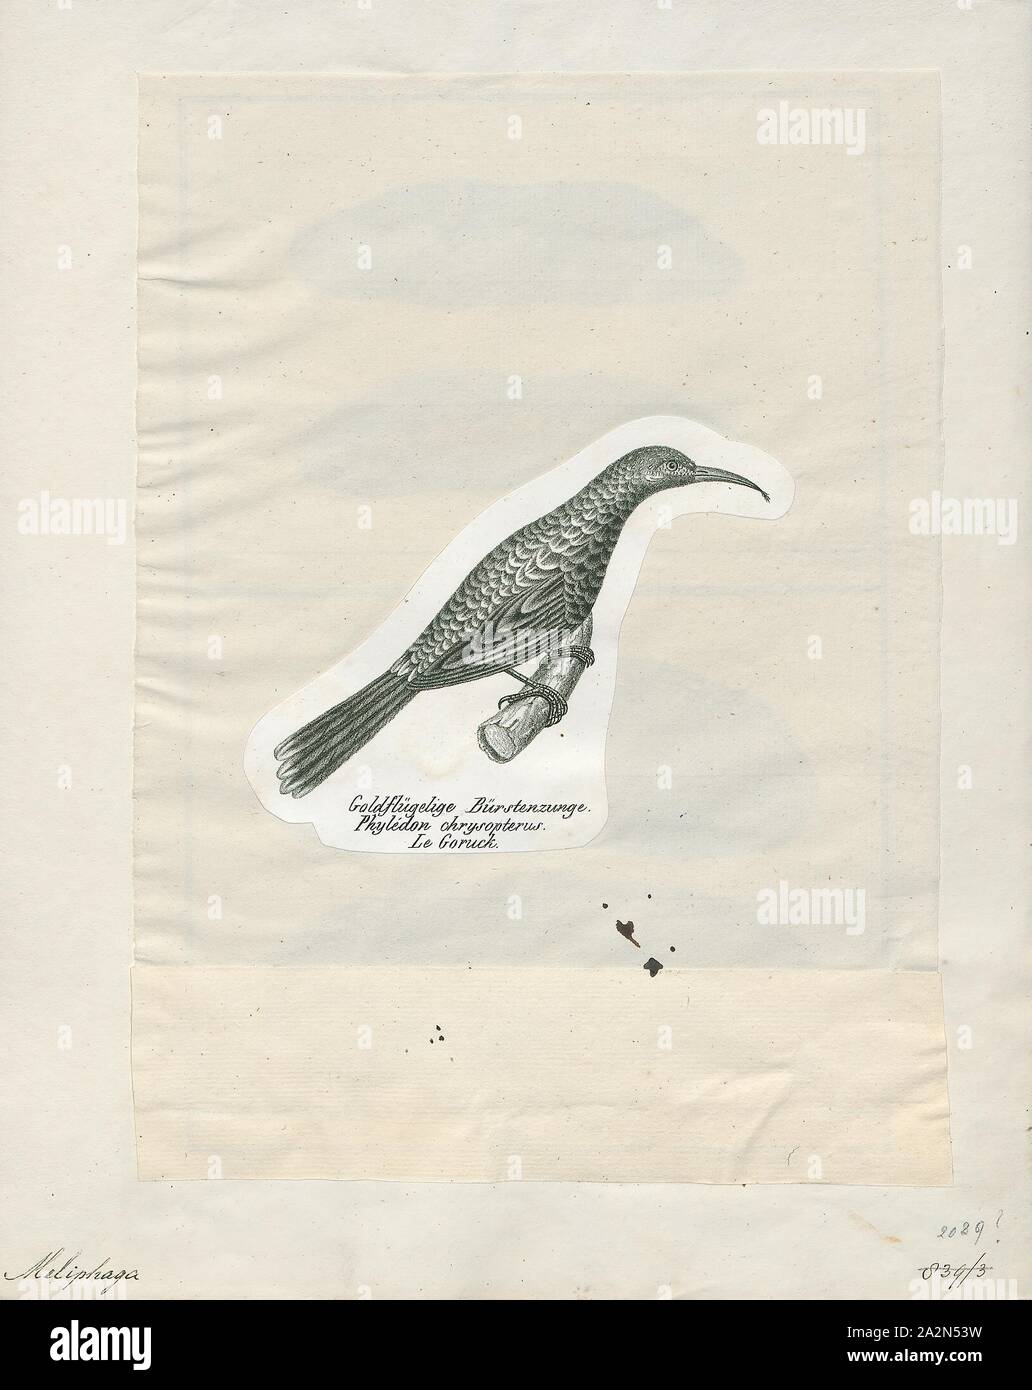 Meliphaga chrysops, Print, Meliphaga is a genus of bird in the family Meliphagidae., 1809-1845 Stock Photo